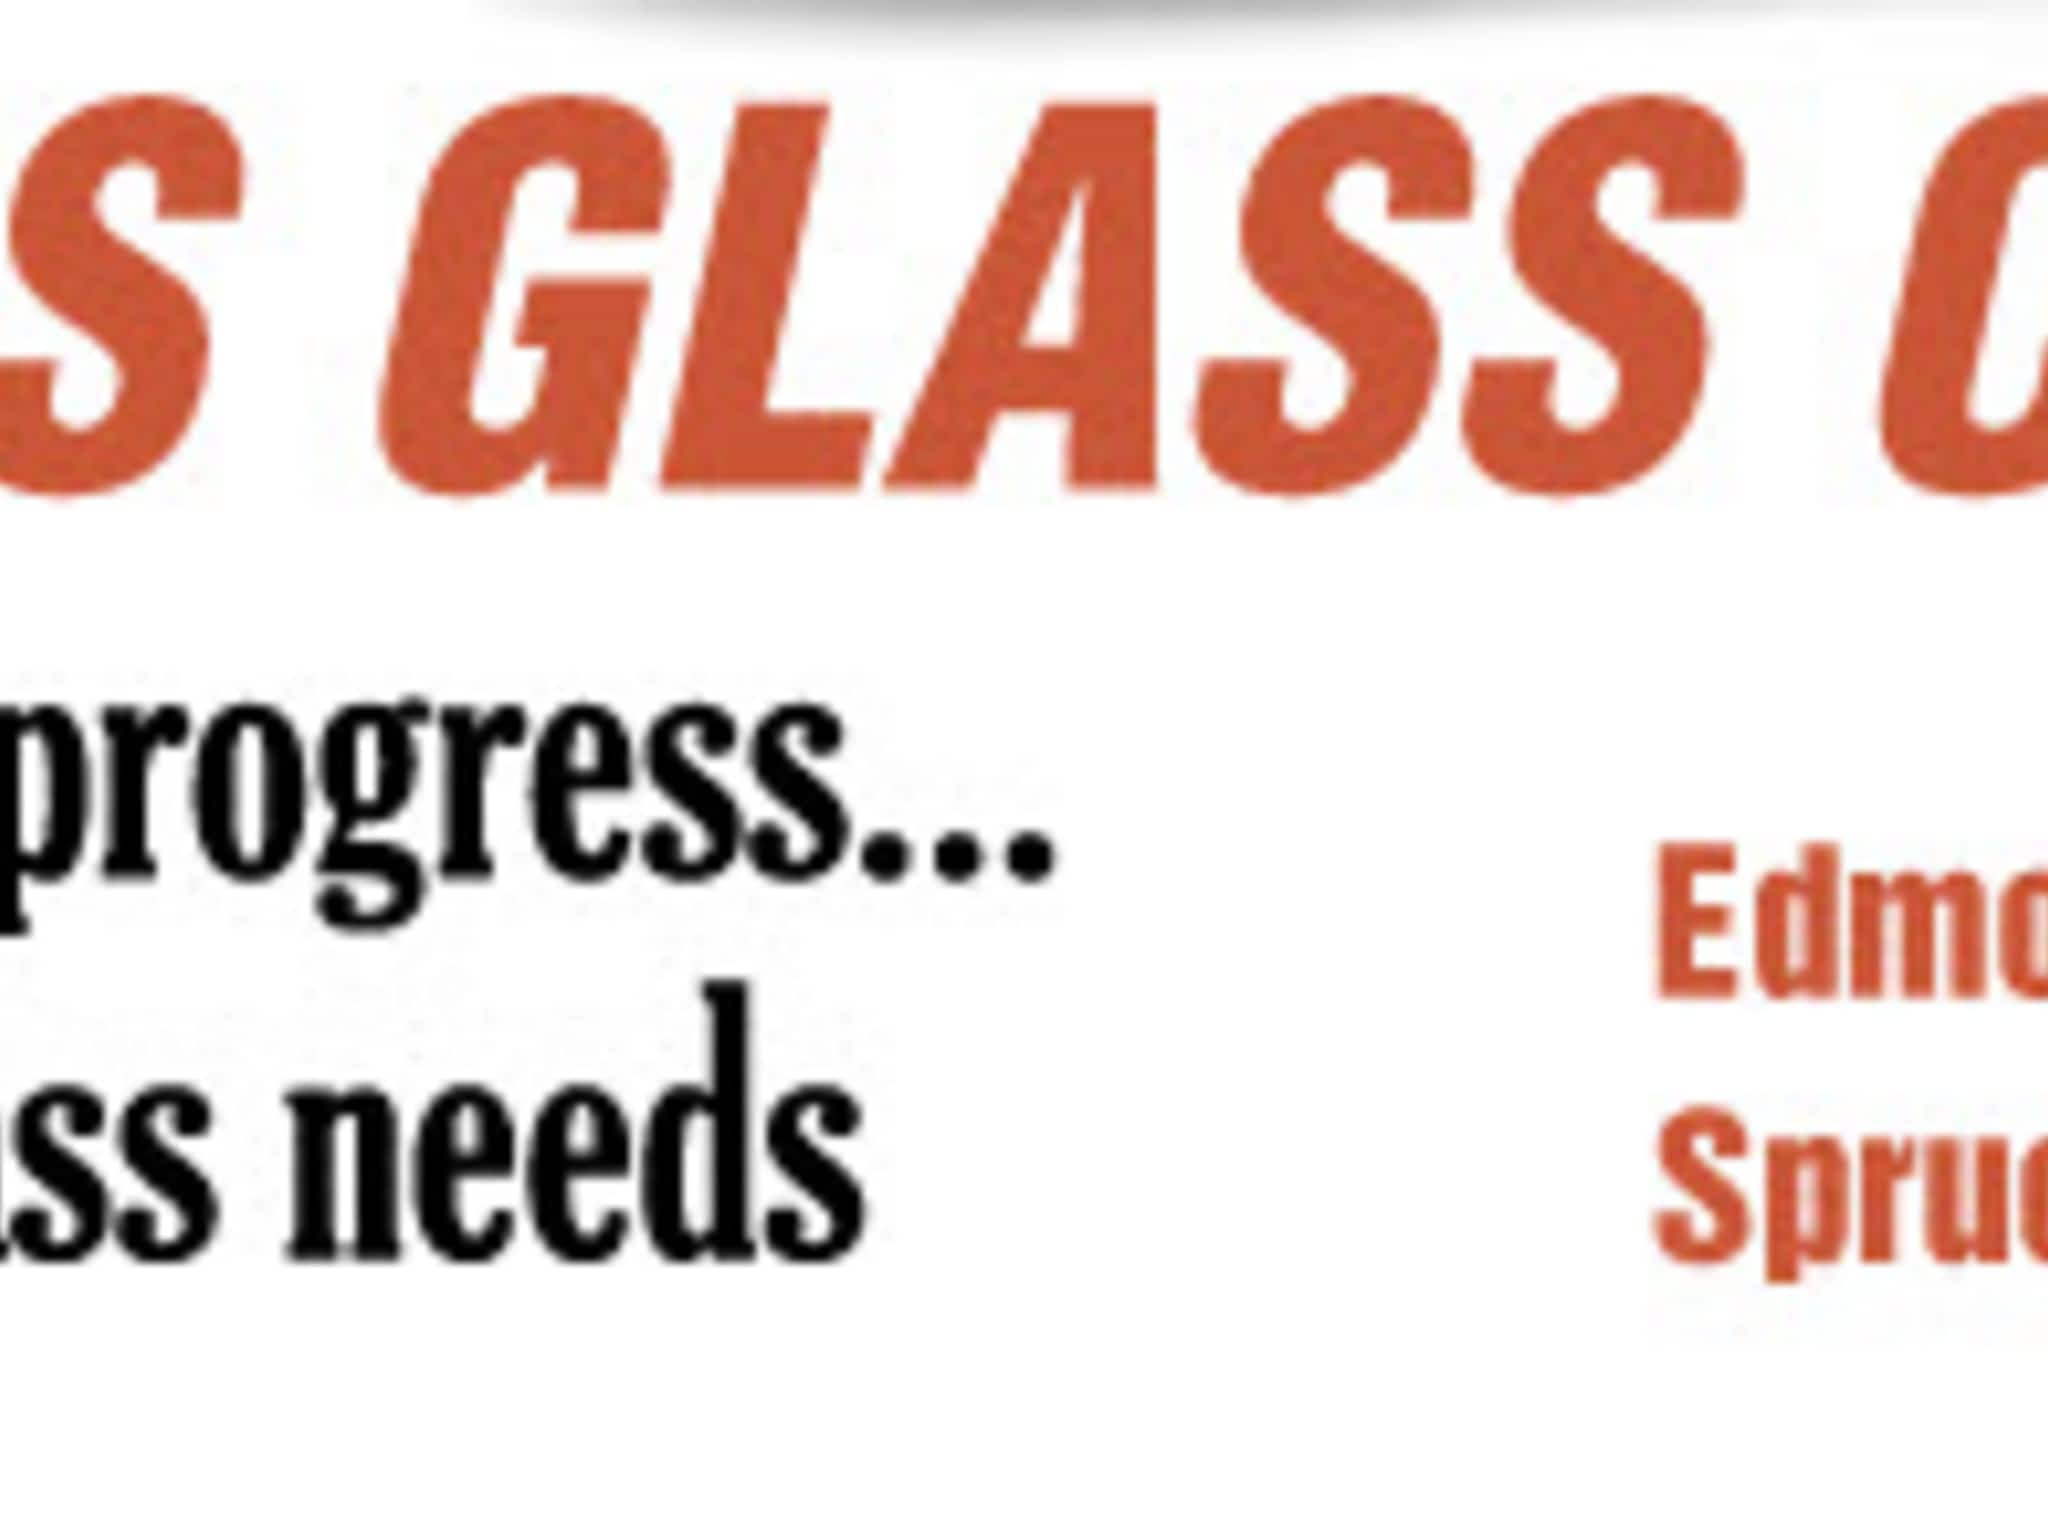 photo Progress Glass Co Ltd